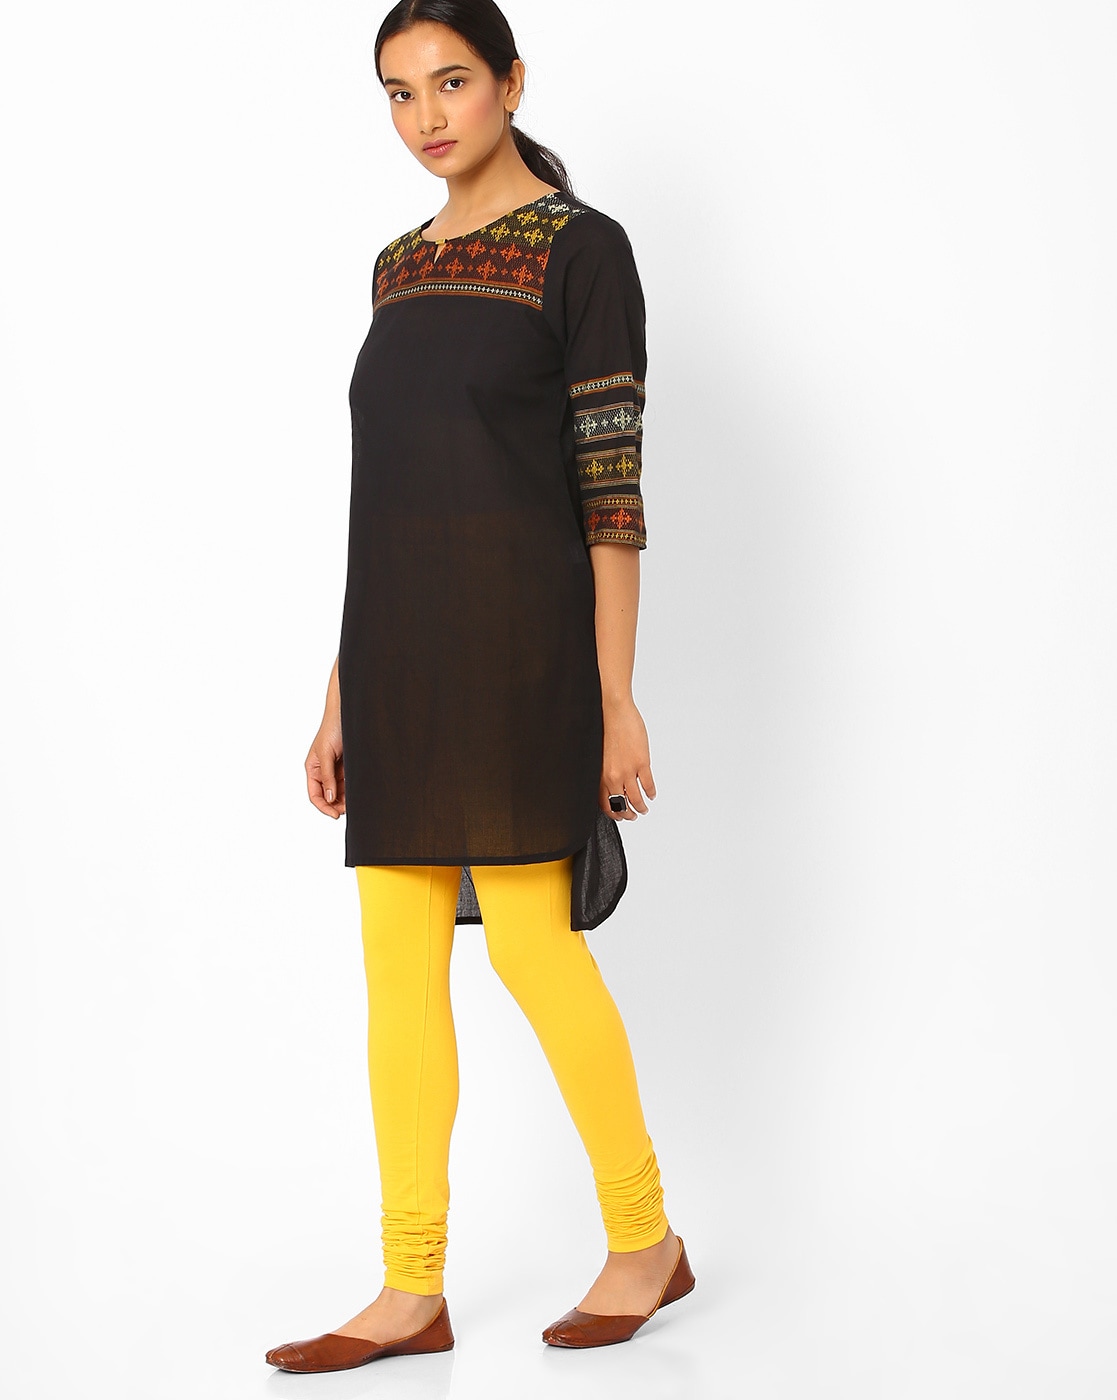 Aggregate more than 165 yellow kurti combination leggings best